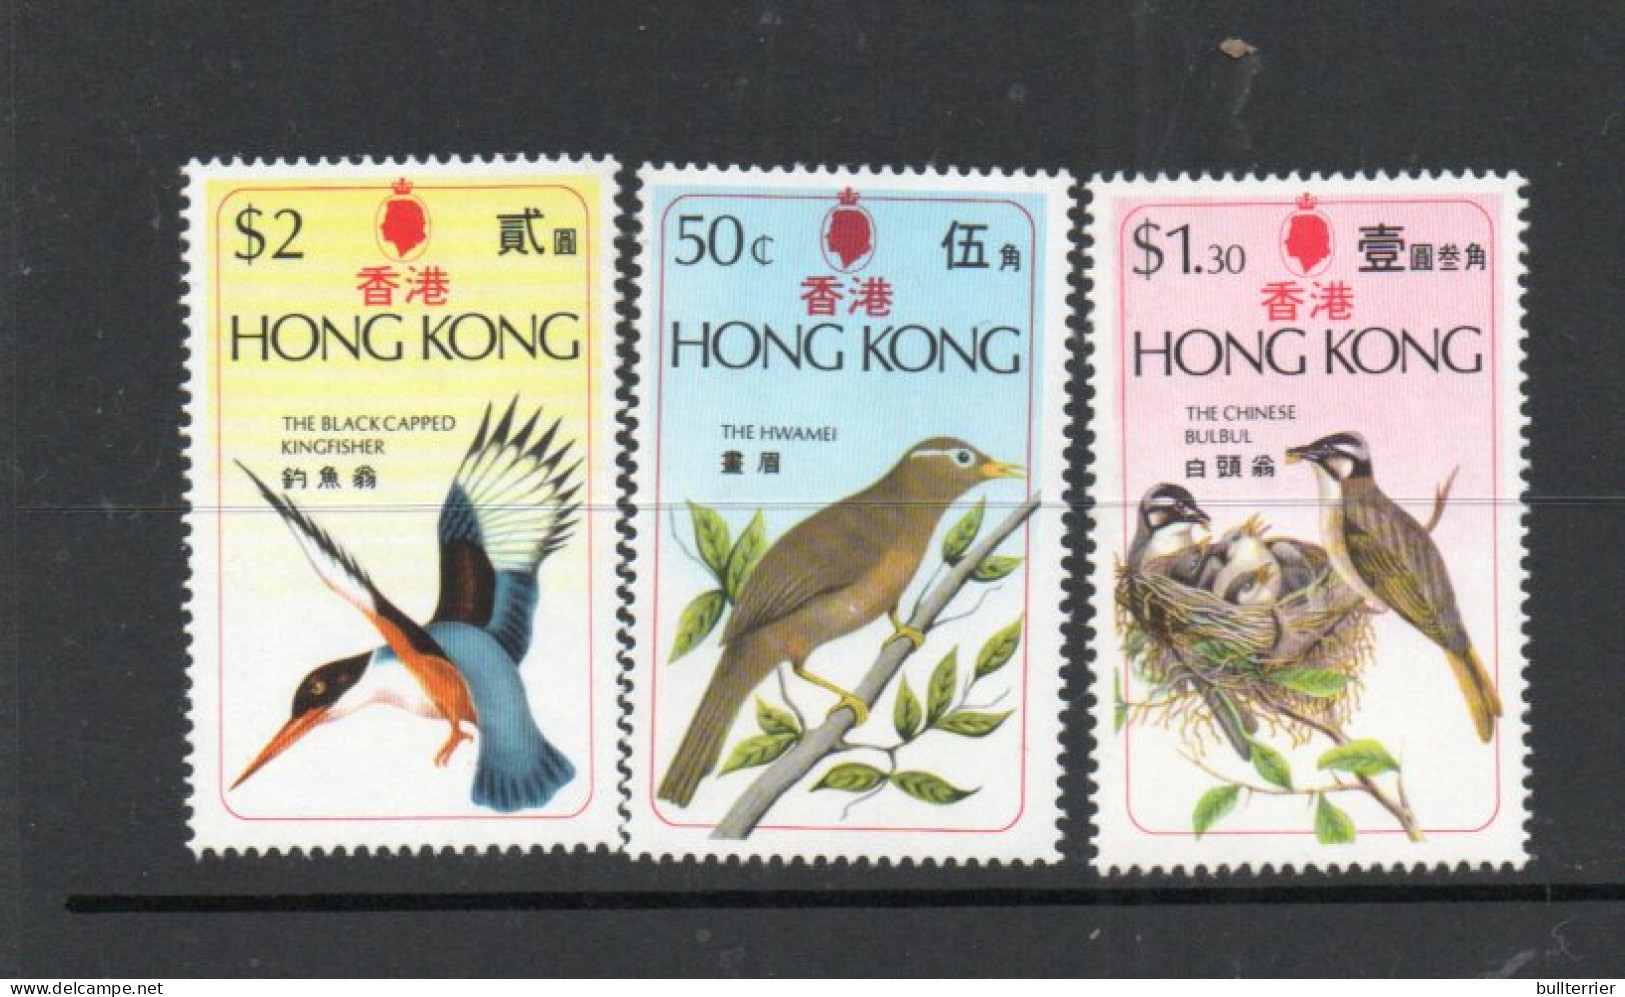 BIRDS - HONG KONG  - 1975- BIRDS SET OF 3  MINT NEVER HINGED, SG CAT £17 - Gallinacées & Faisans